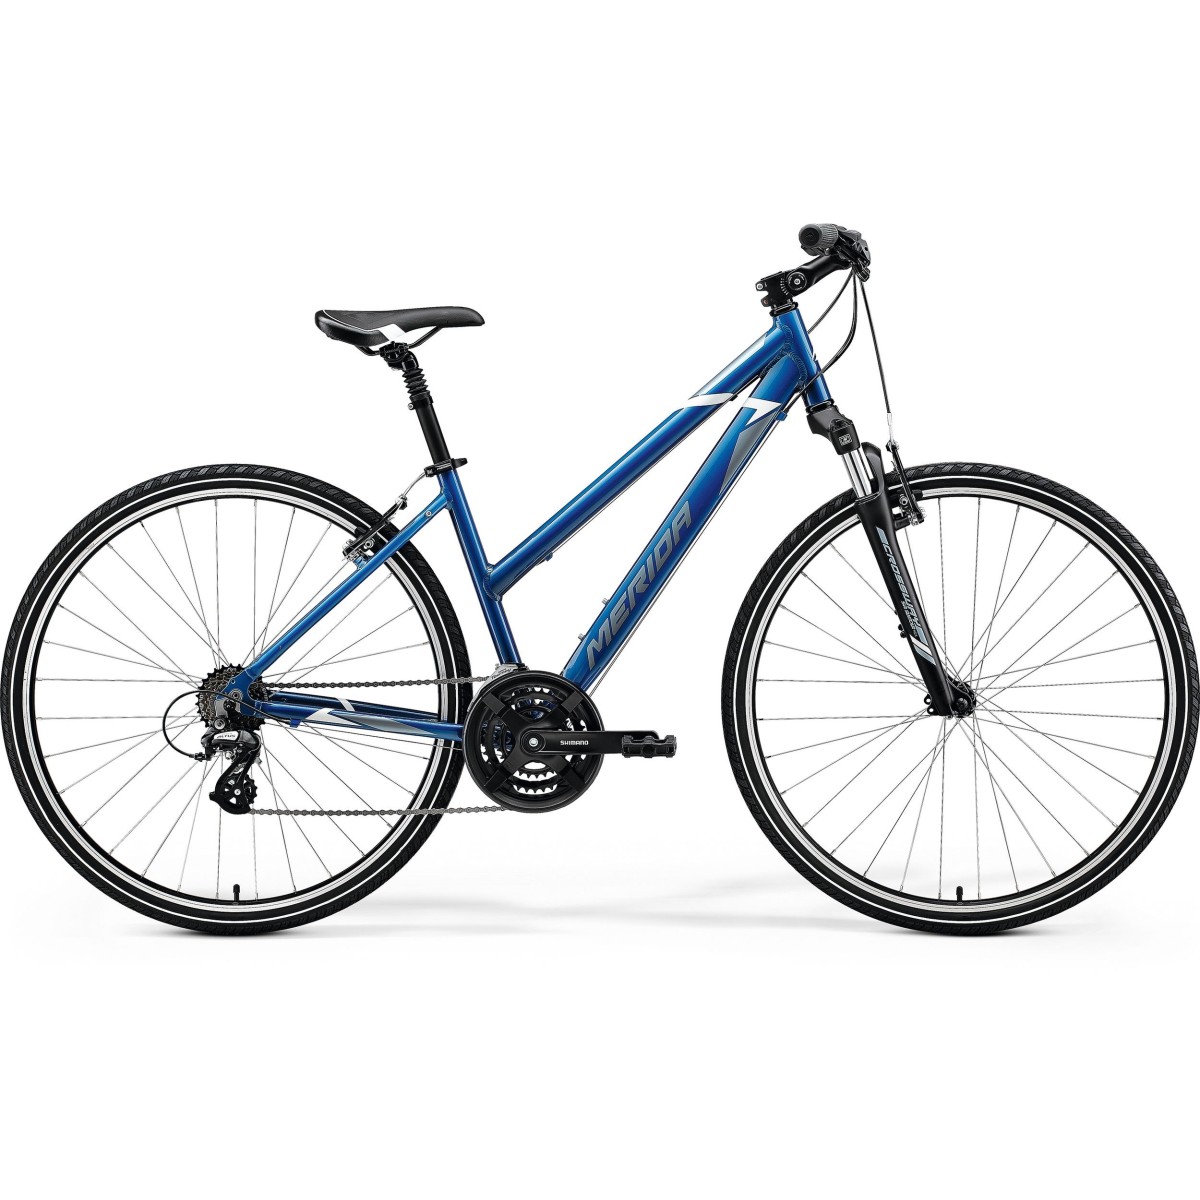 MERIDA CROSSWAY 10-V LADY bicycle - blue